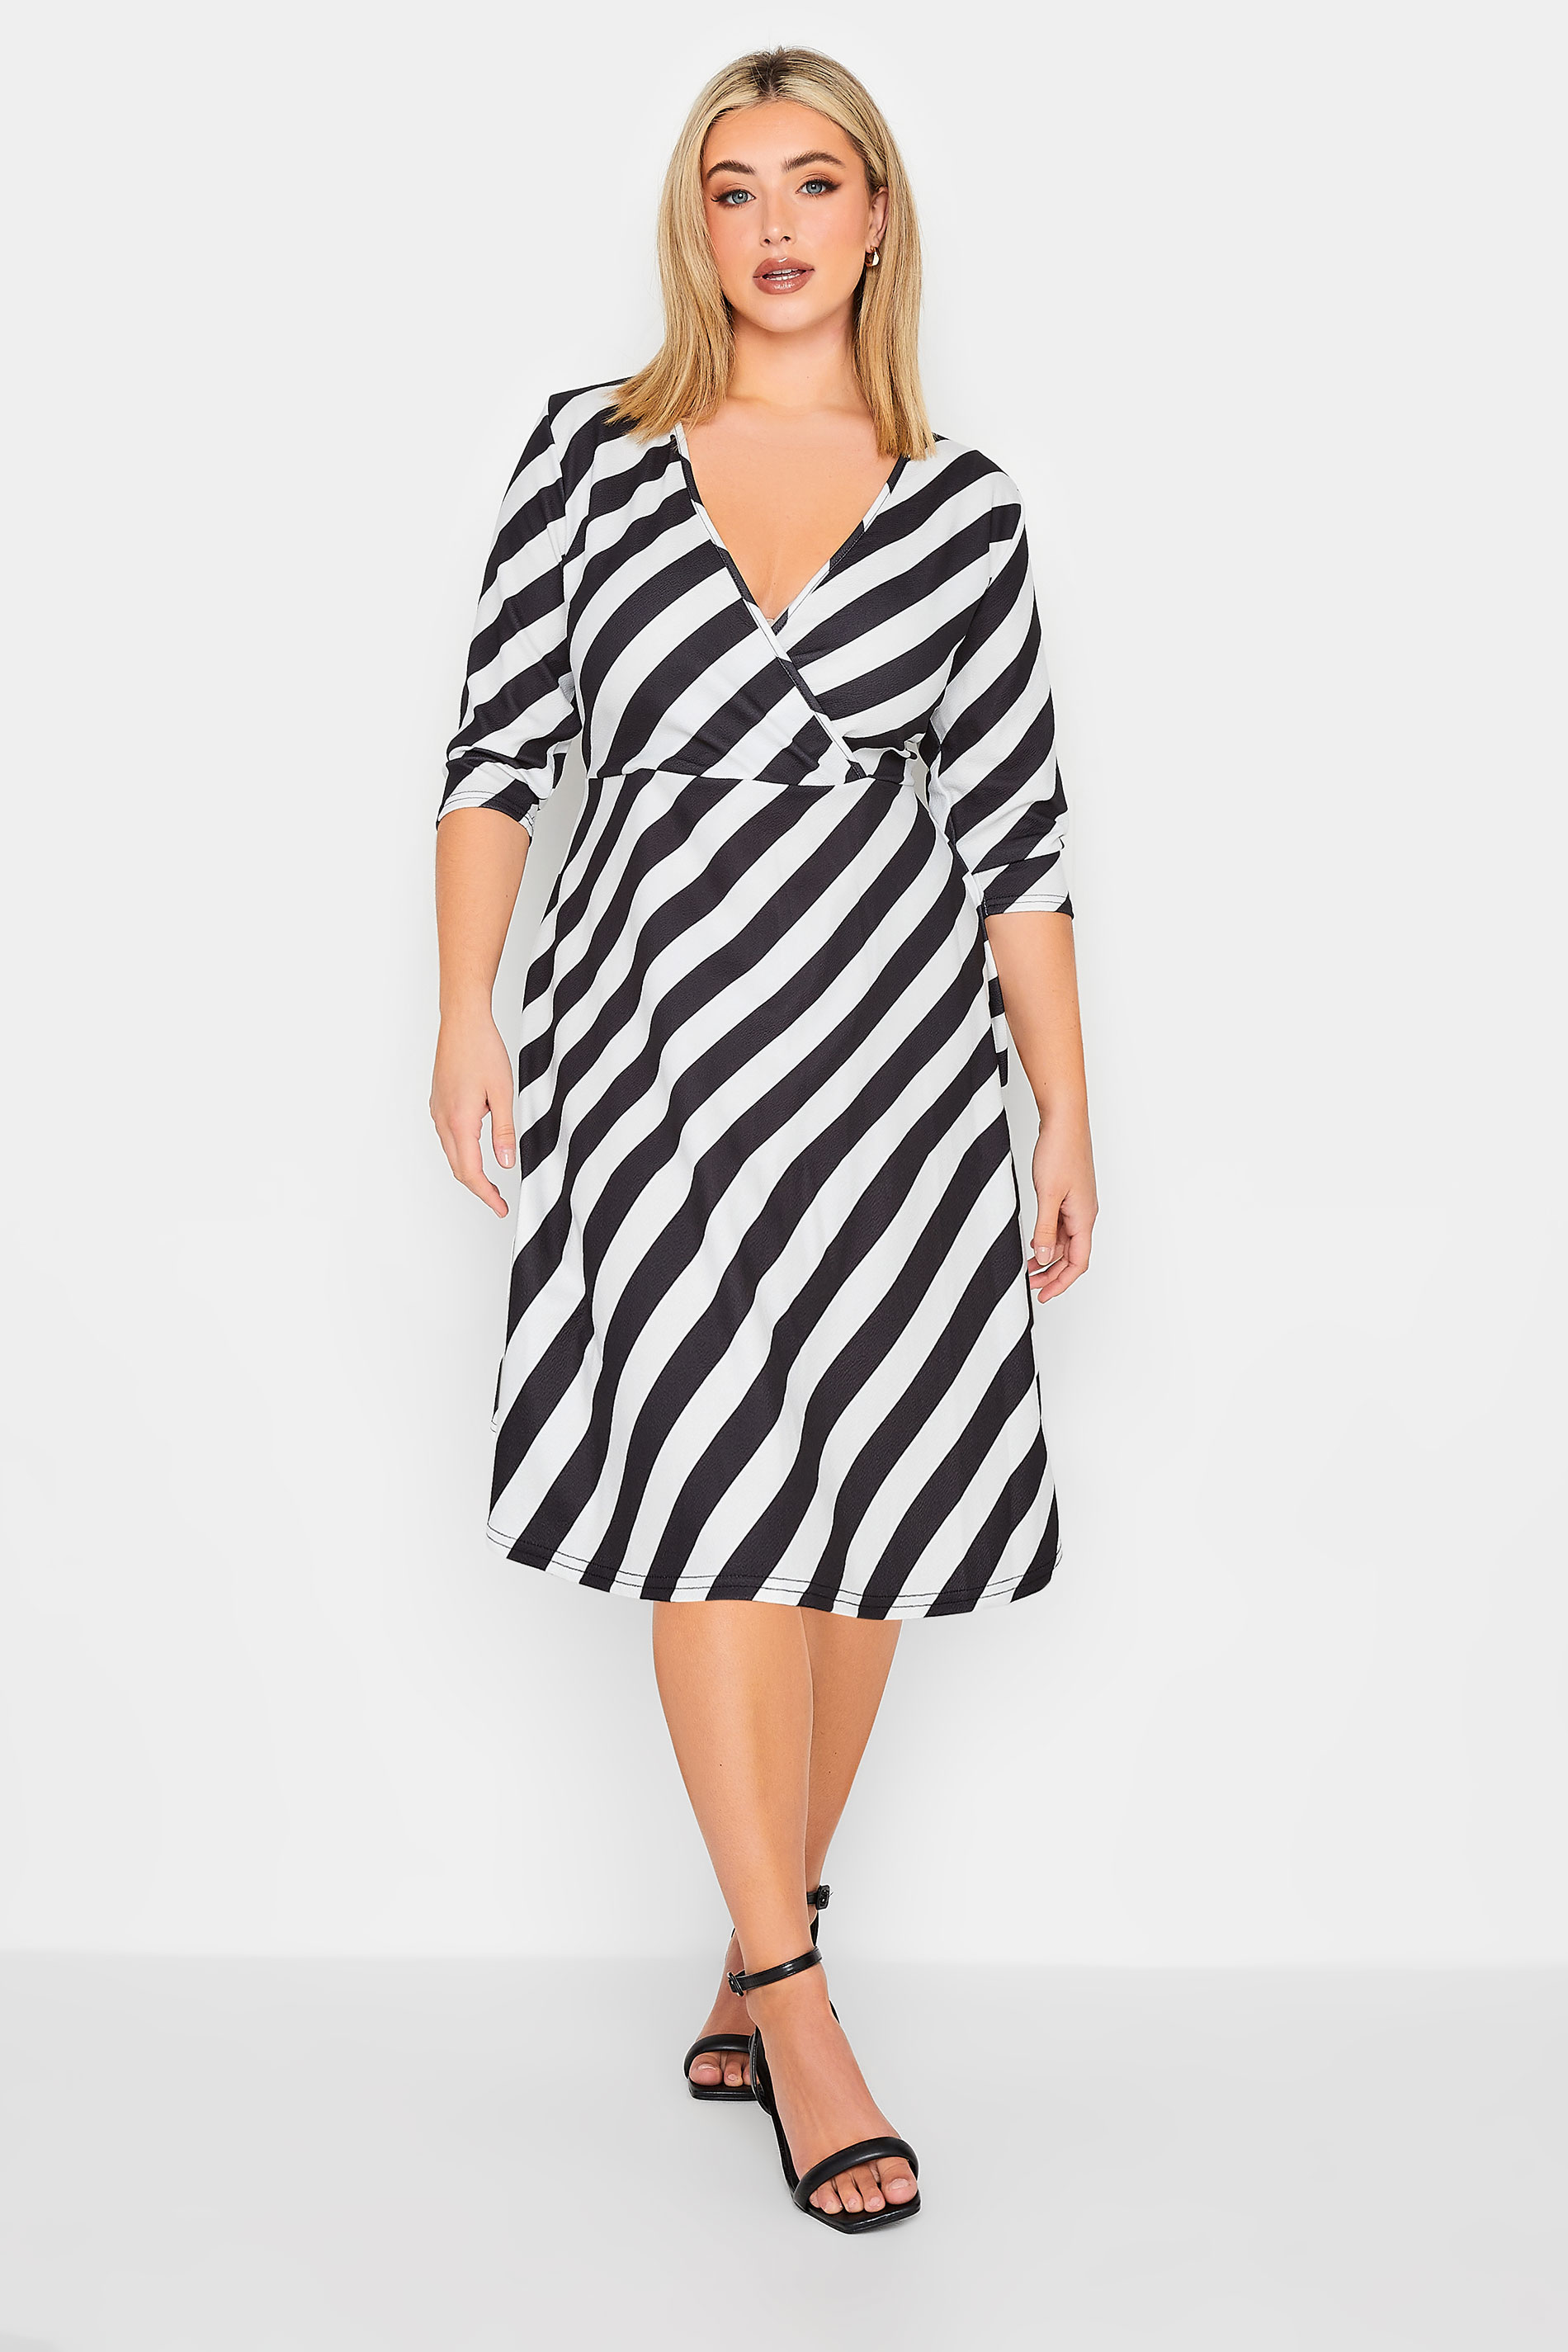 YOURS PETITE Plus Size Black & White Stripe Wrap Dress | Yours Clothing 2